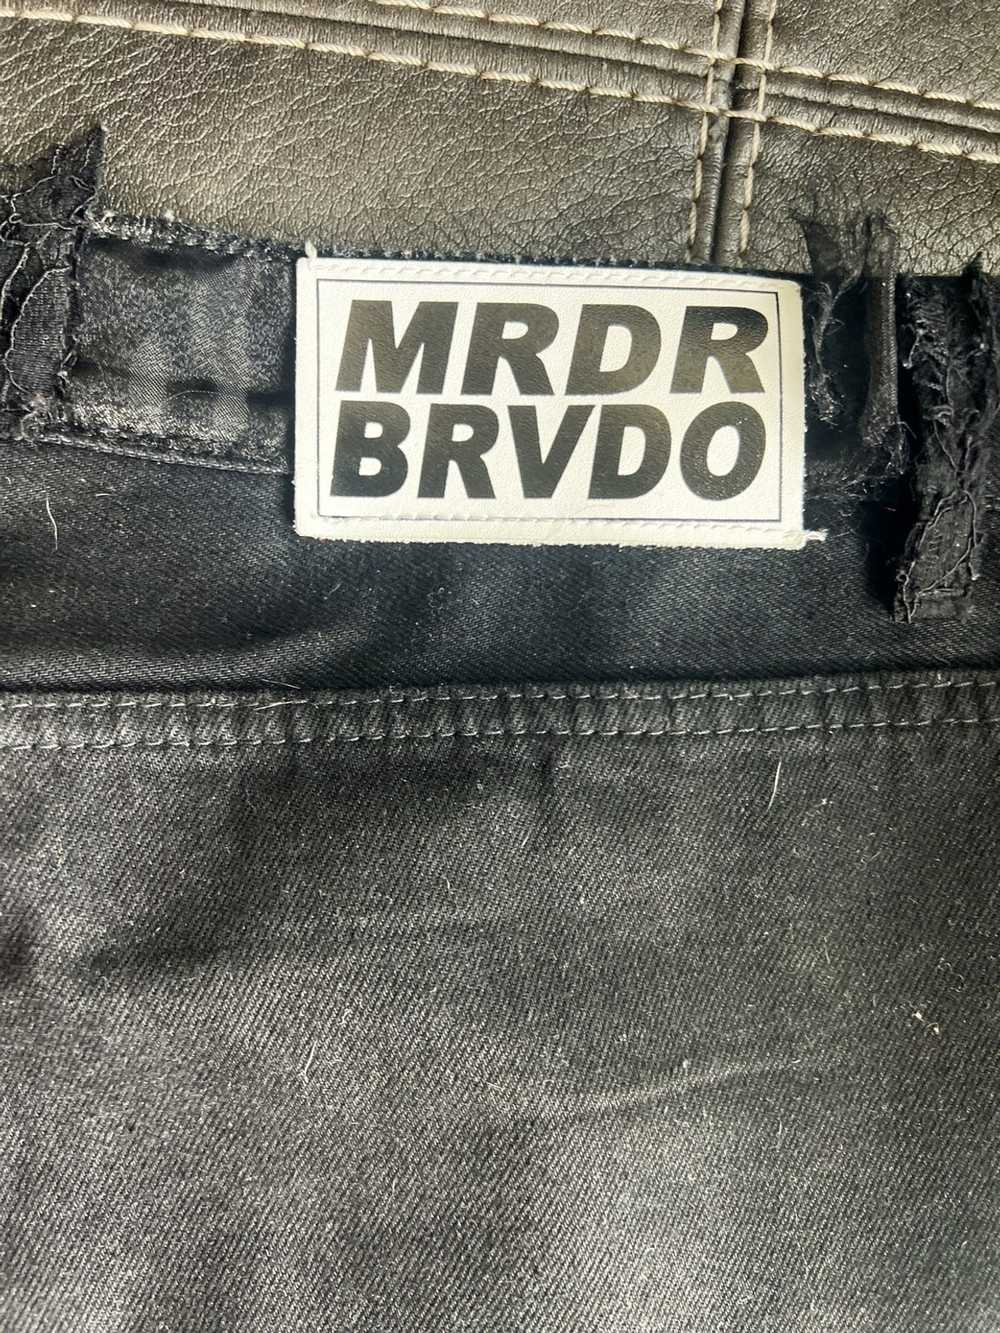 Who Decides War Murder bravado jeans - image 6